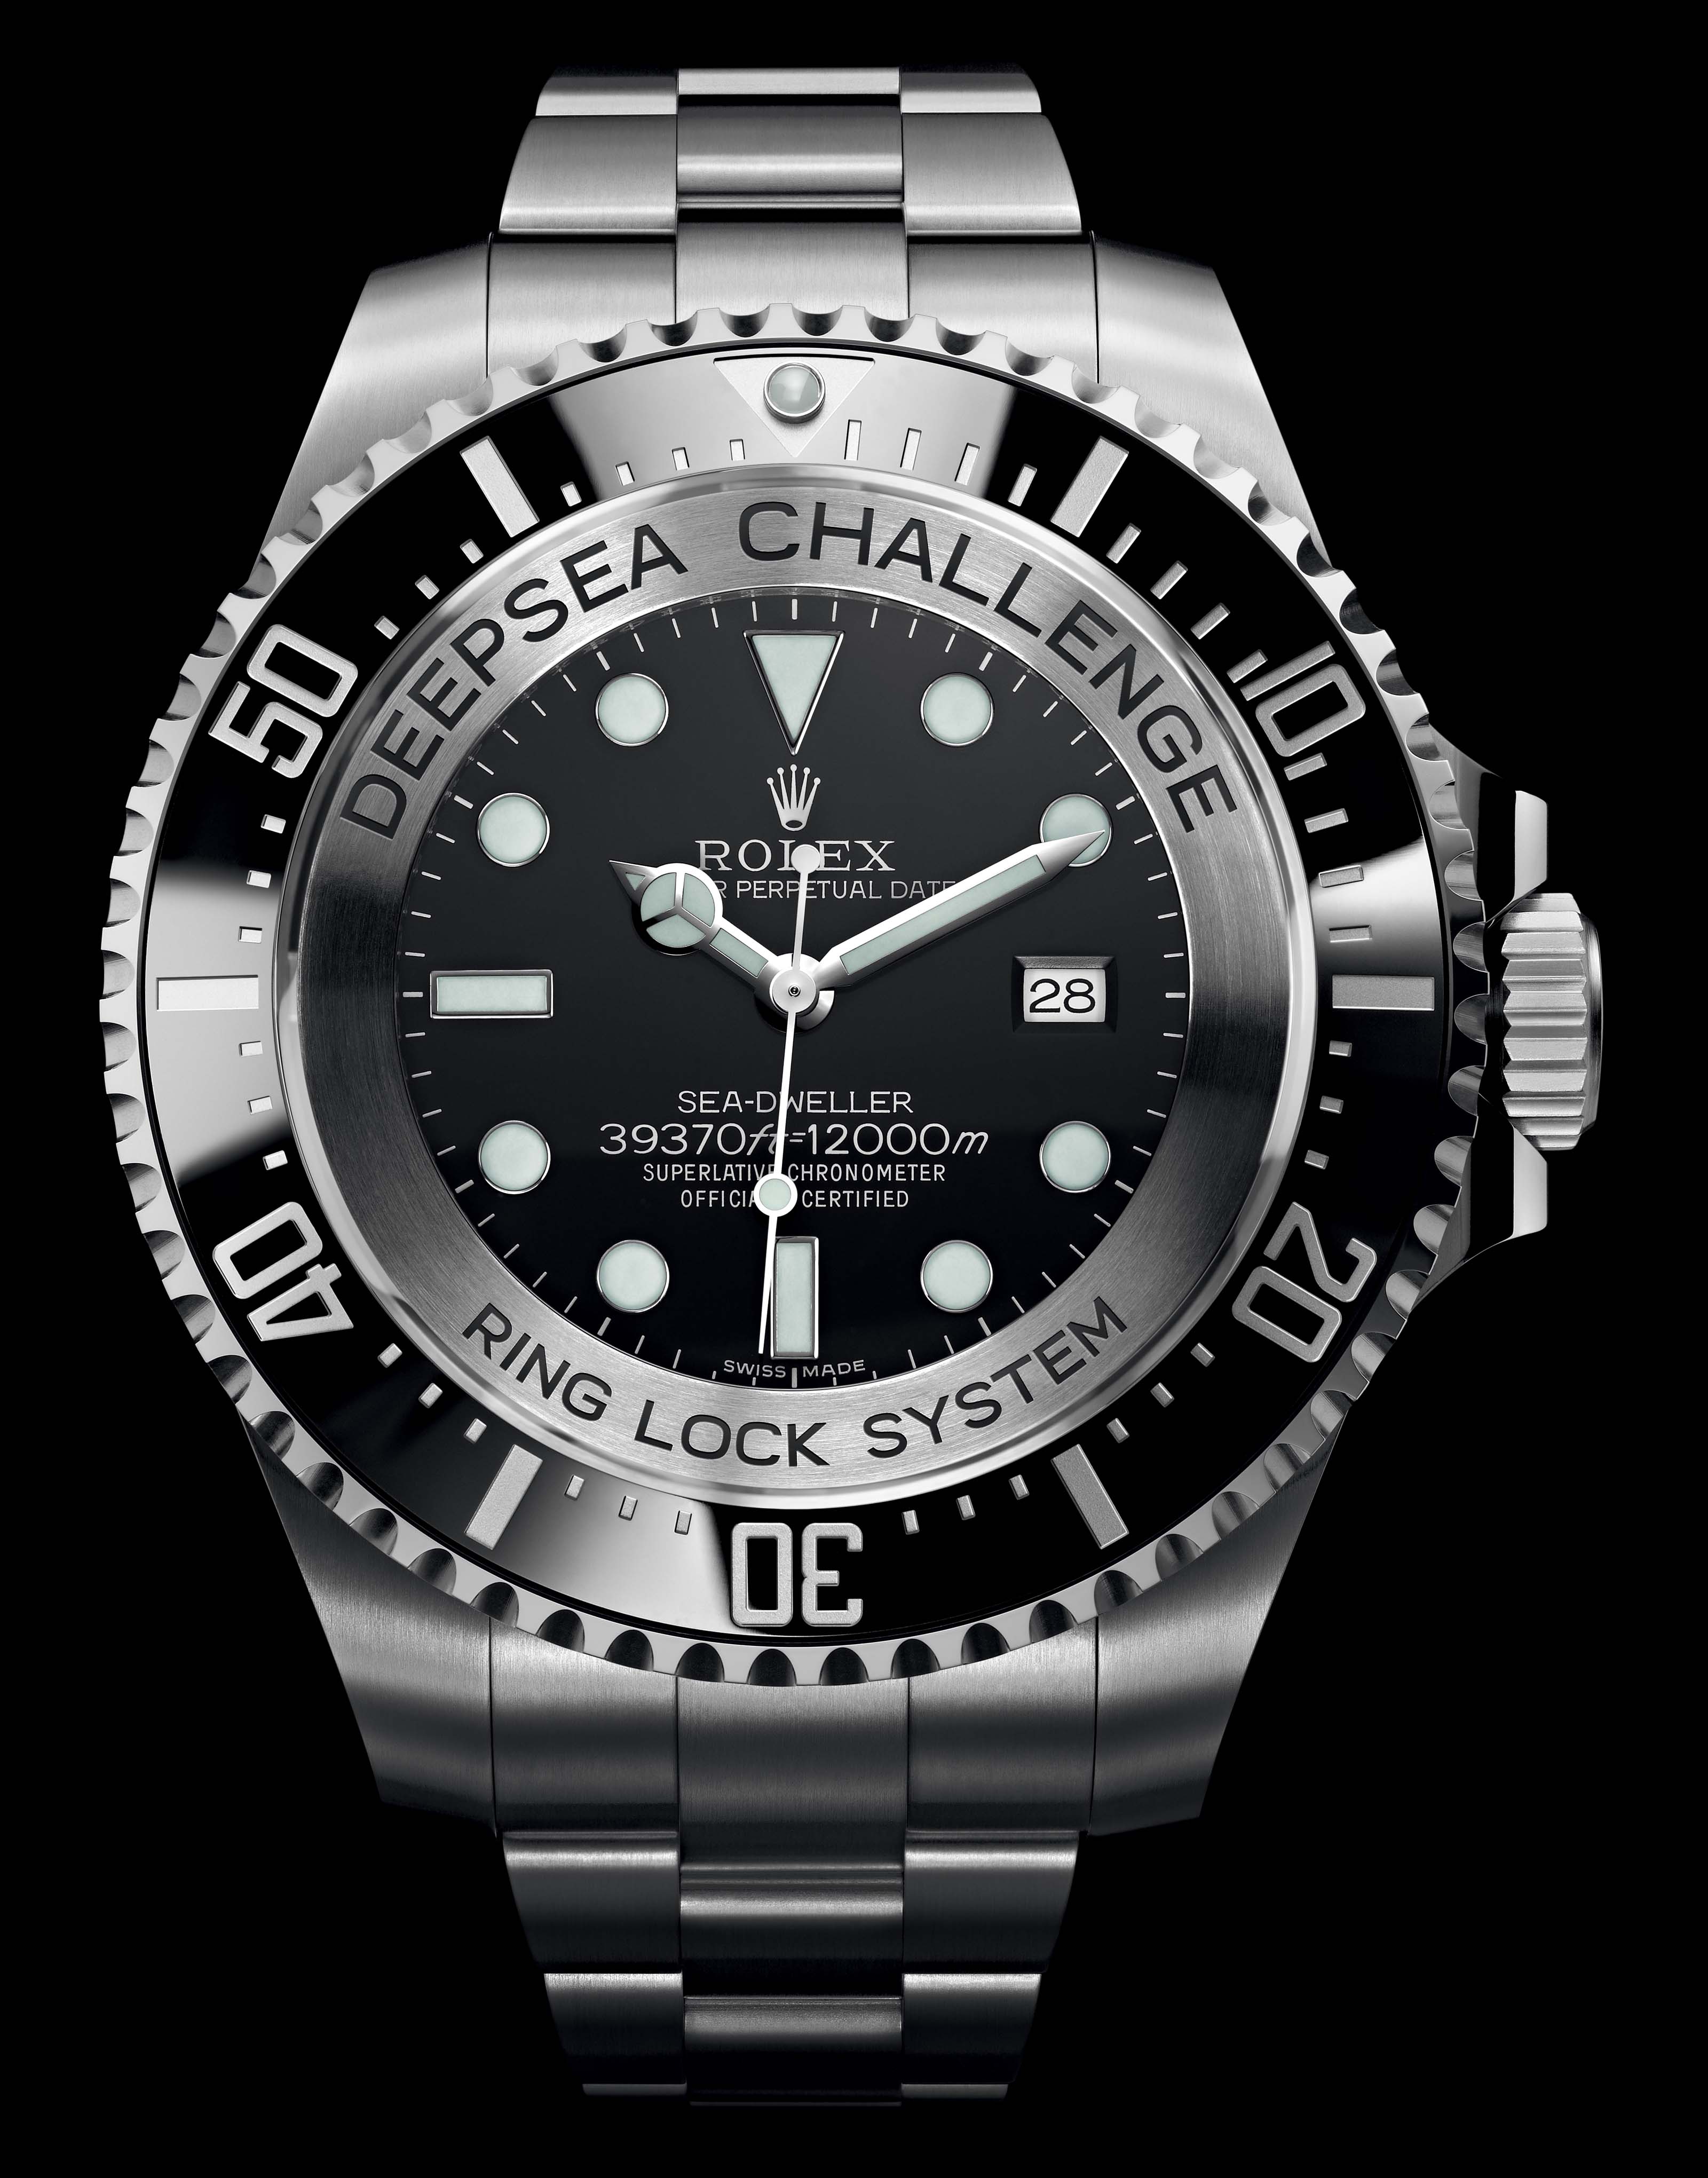 Rolex Deepsea Challenge 2012 watch 